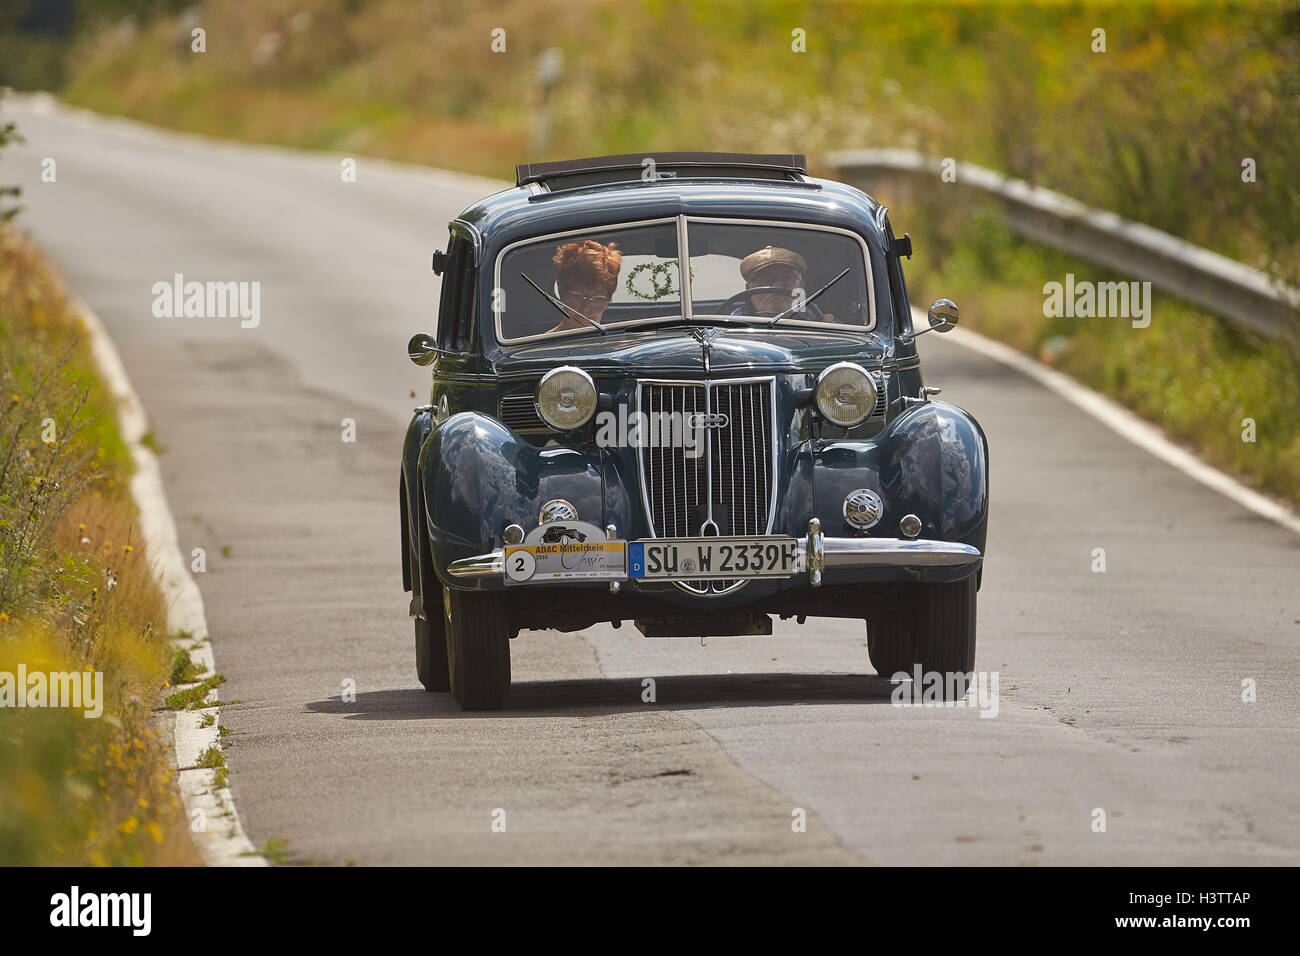 ADAC rallye de voitures anciennes Classic, Mittelrhein Wanderer W 23, construit en 1939, Bad Ems, Rhénanie-Palatinat, Allemagne Banque D'Images